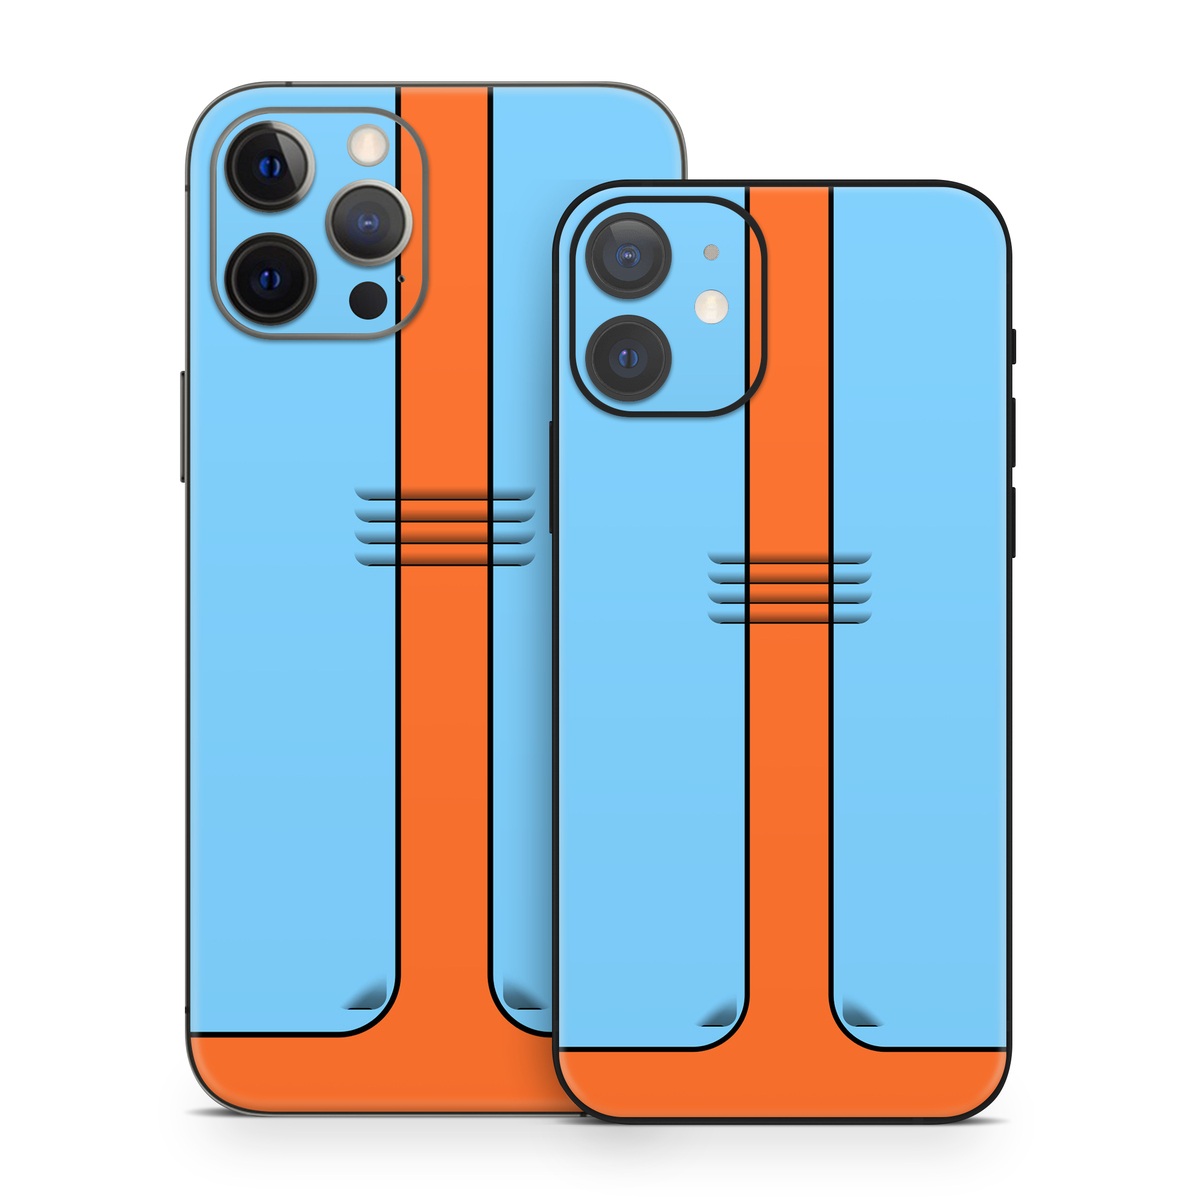 iPhone 12 Skin design of Line, with blue, orange, black colors